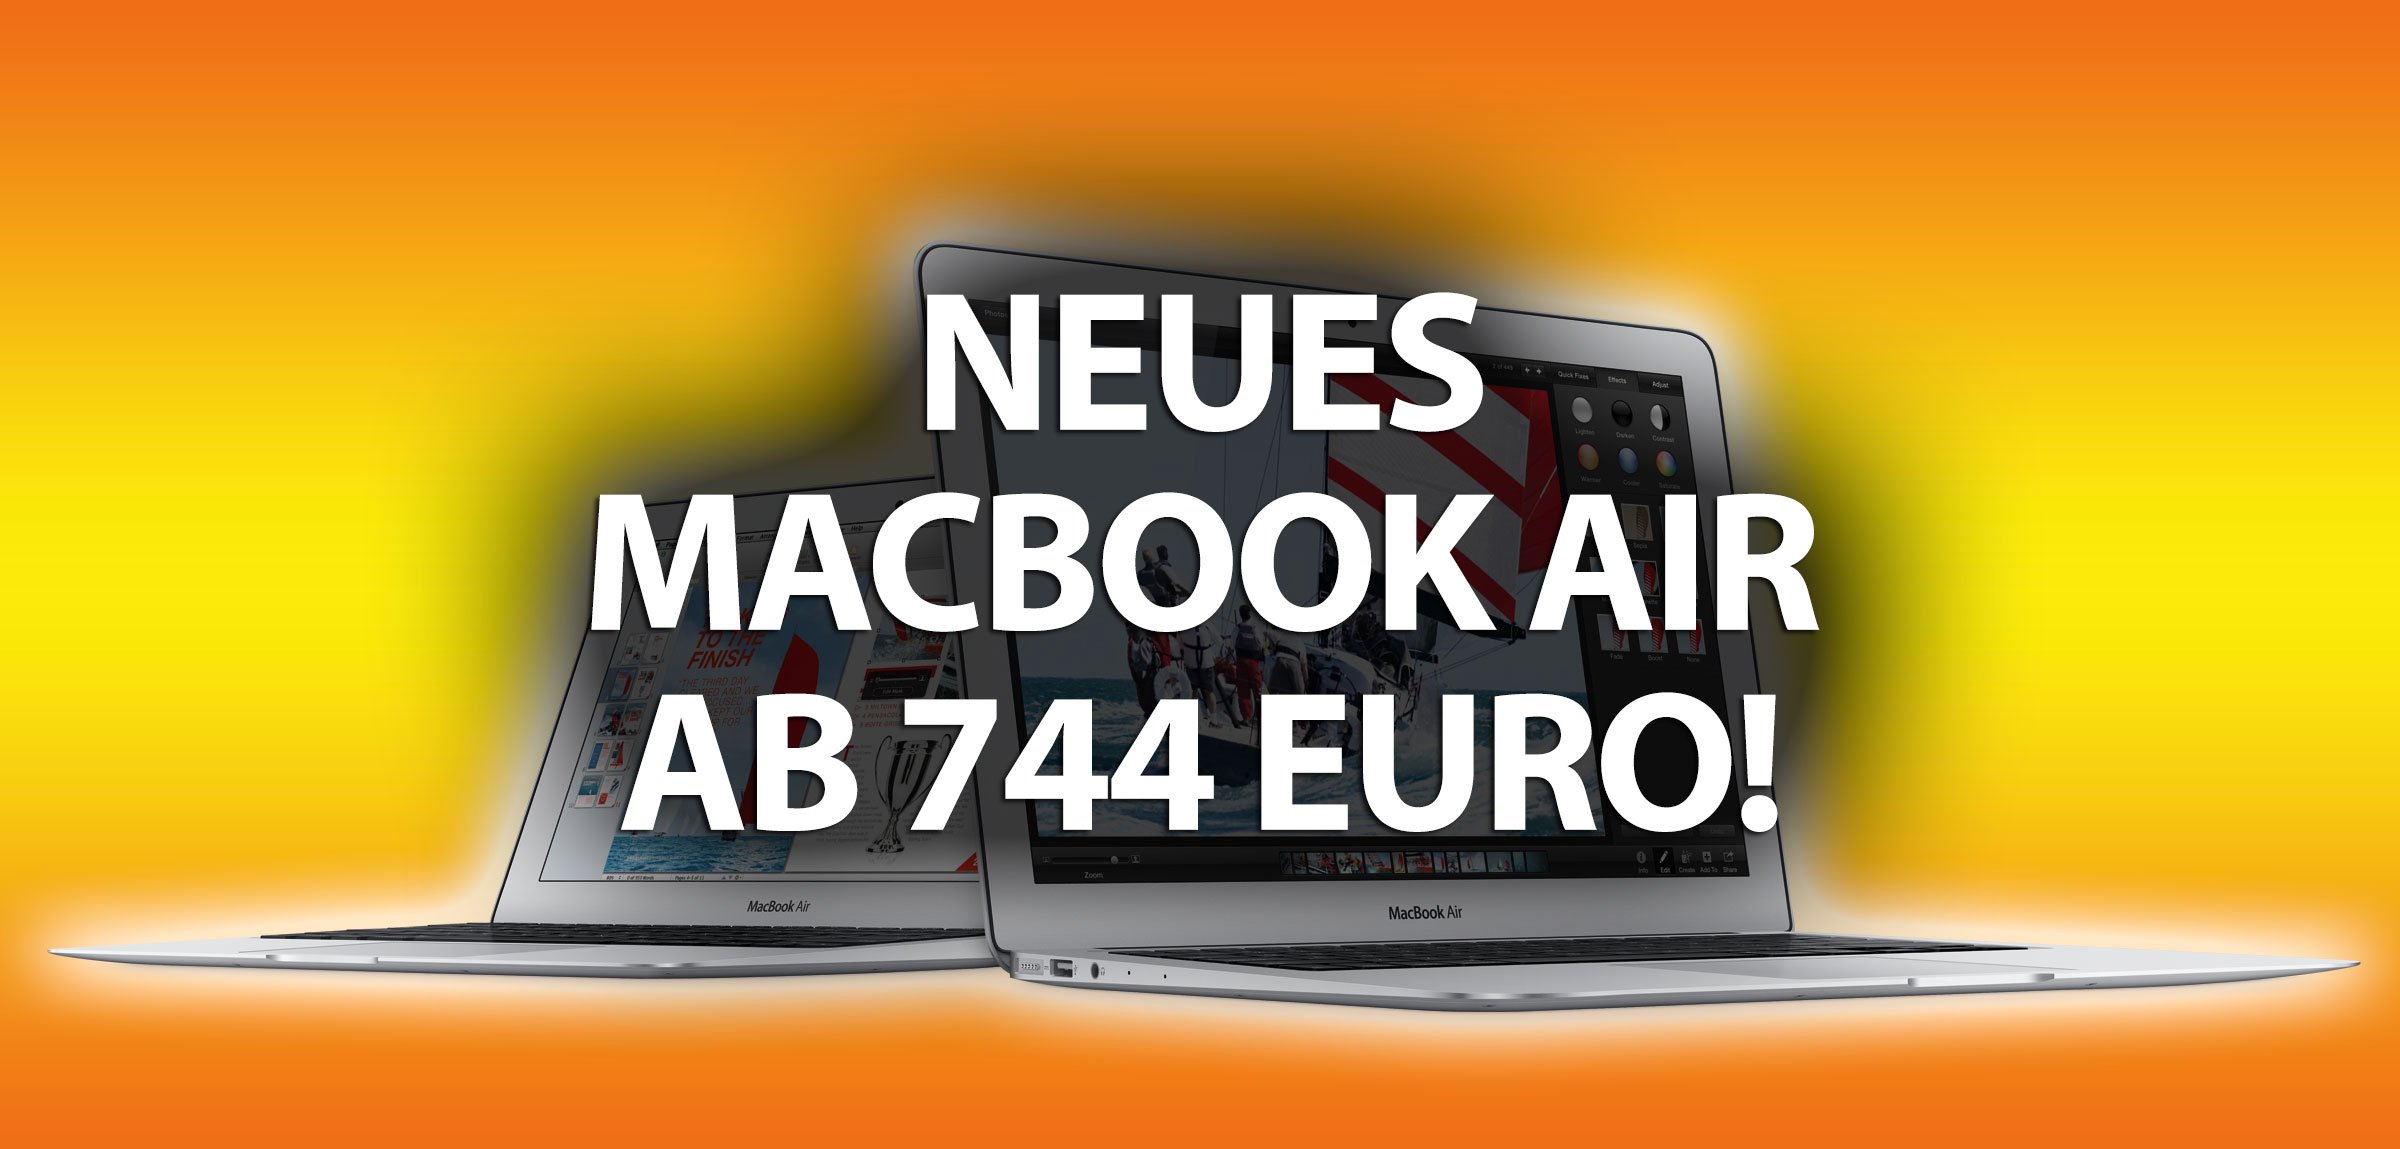 Neuer Rabattcode für Macbook Air 2014: Bester Preis! (Update: Studenten-Rabatt) 9